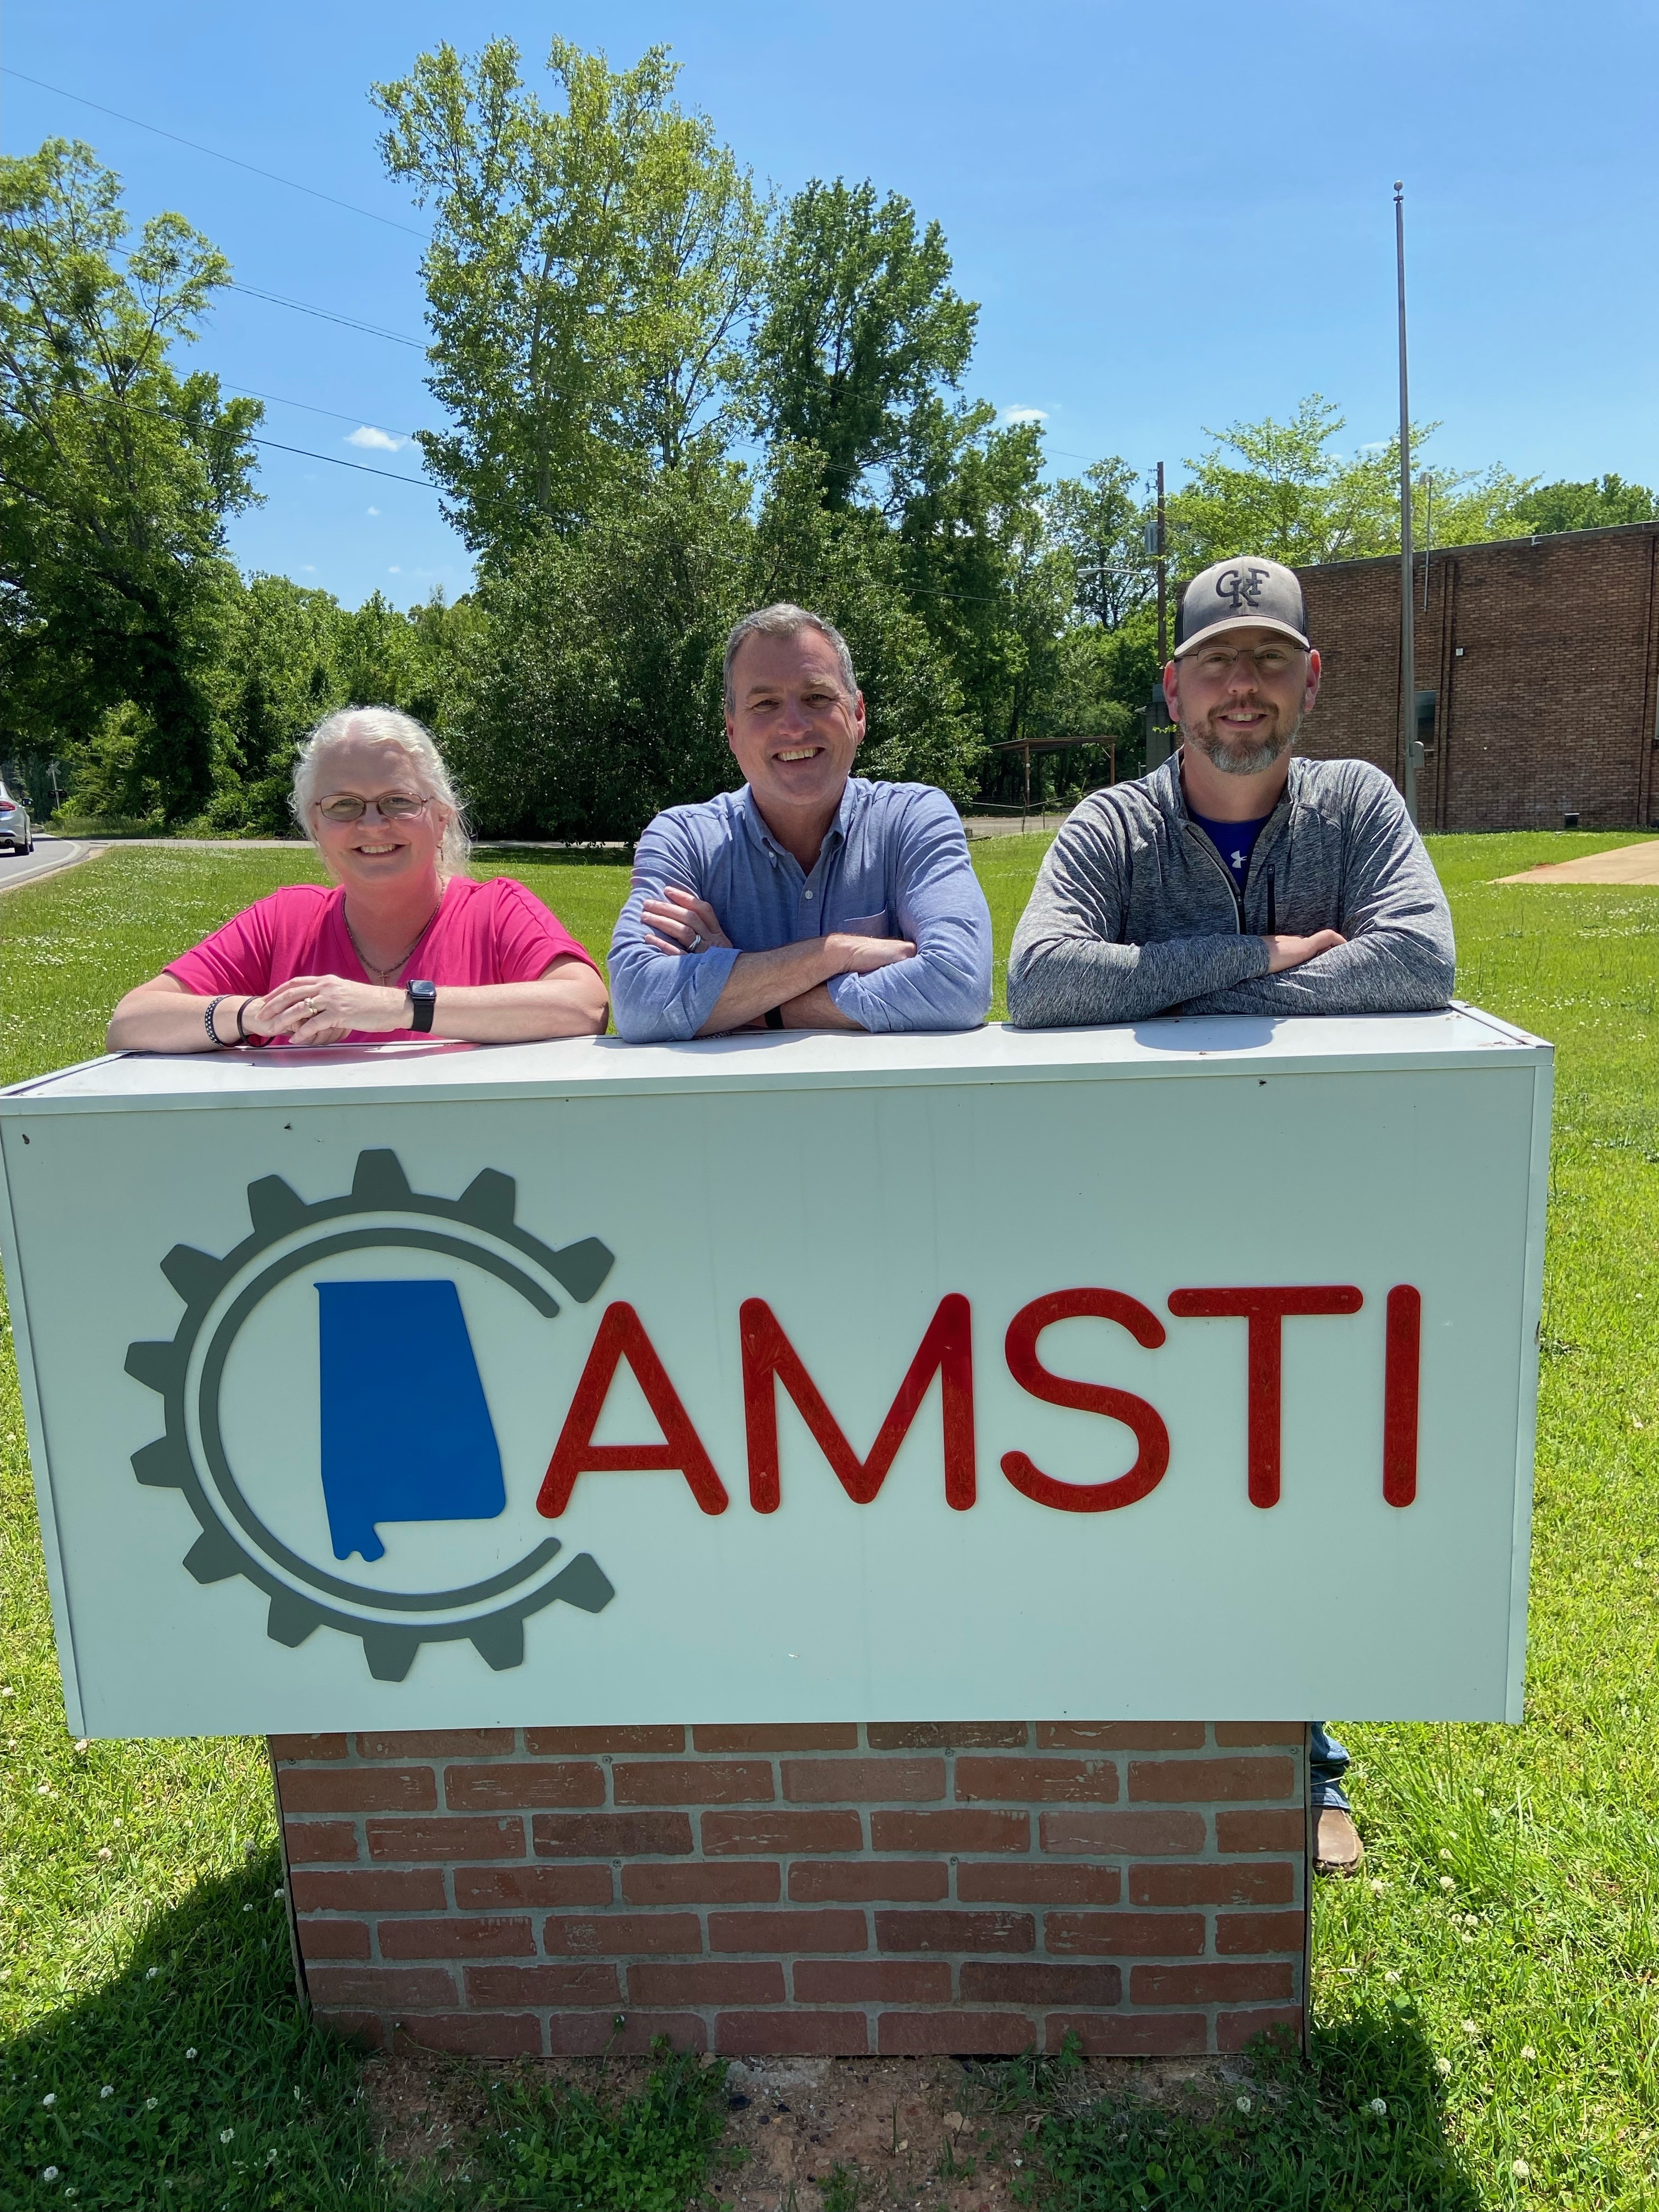 AMSTI-AU Spotlight: meet the original staff improving STEM instruction and empowering educators across the state